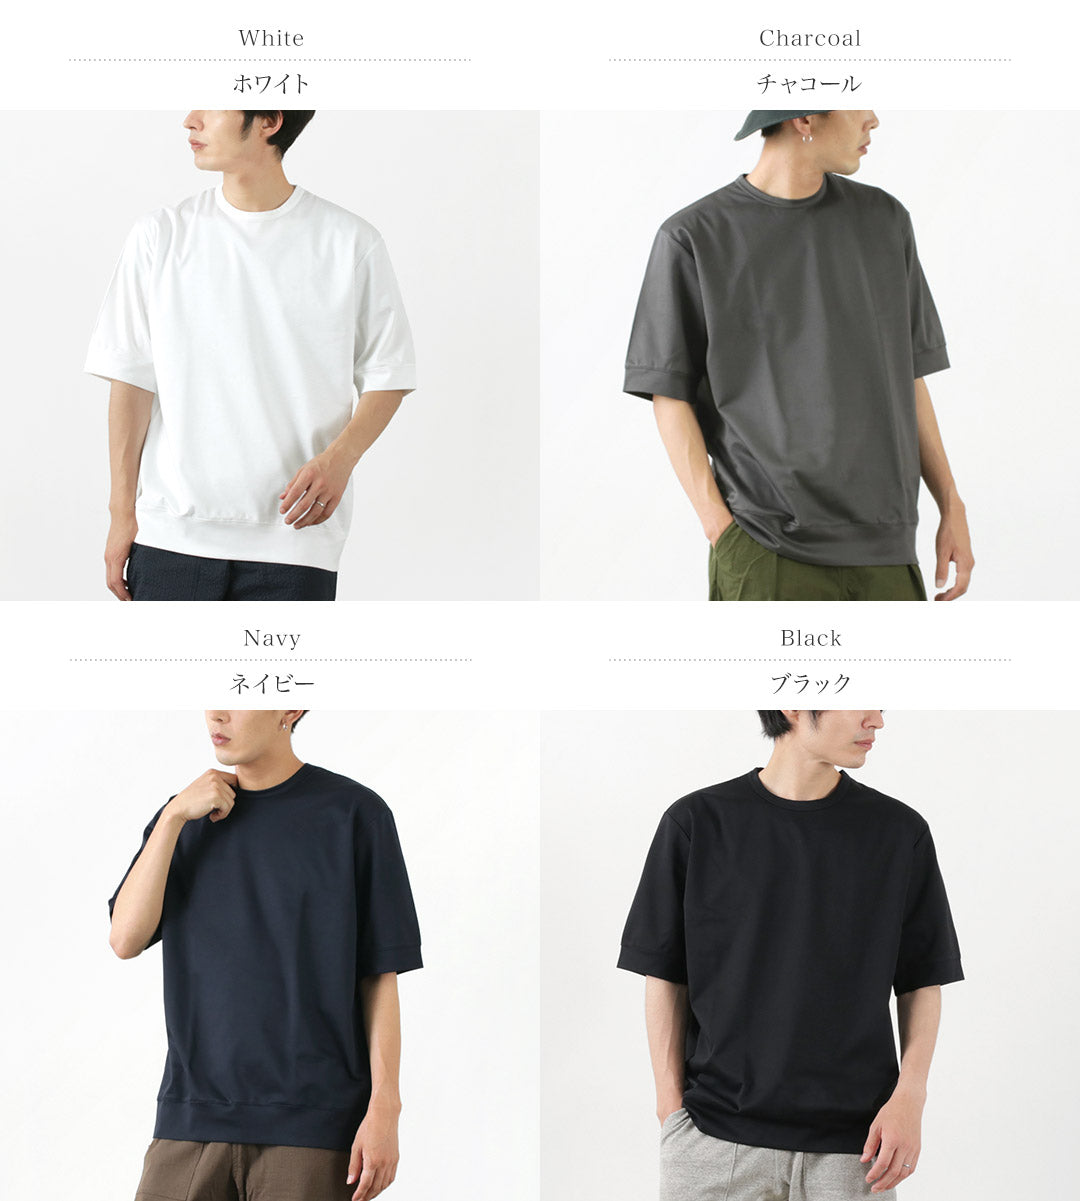 RE MADE IN TOKYO JAPAN（アールイー） ハーフスリーブ ワイドドレスTシャツ / 半袖 メンズ トップス 無地 クルーネック 日本製 6022S-CT Half Sleeve Wide Dress T-shirt